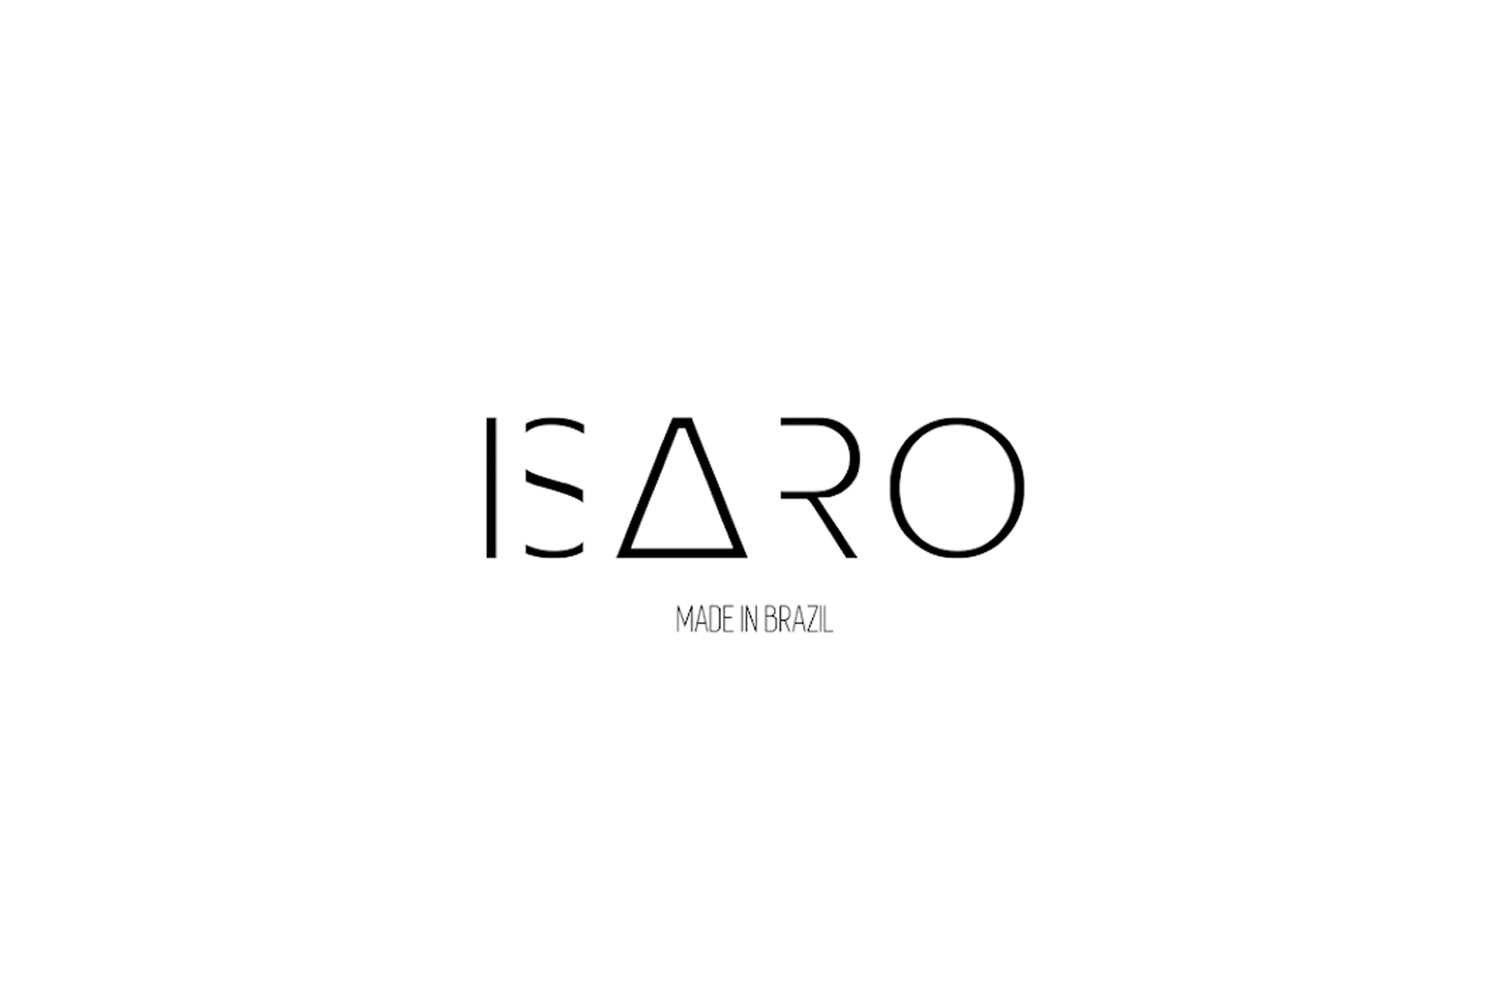 logos_clientes_site_isaro